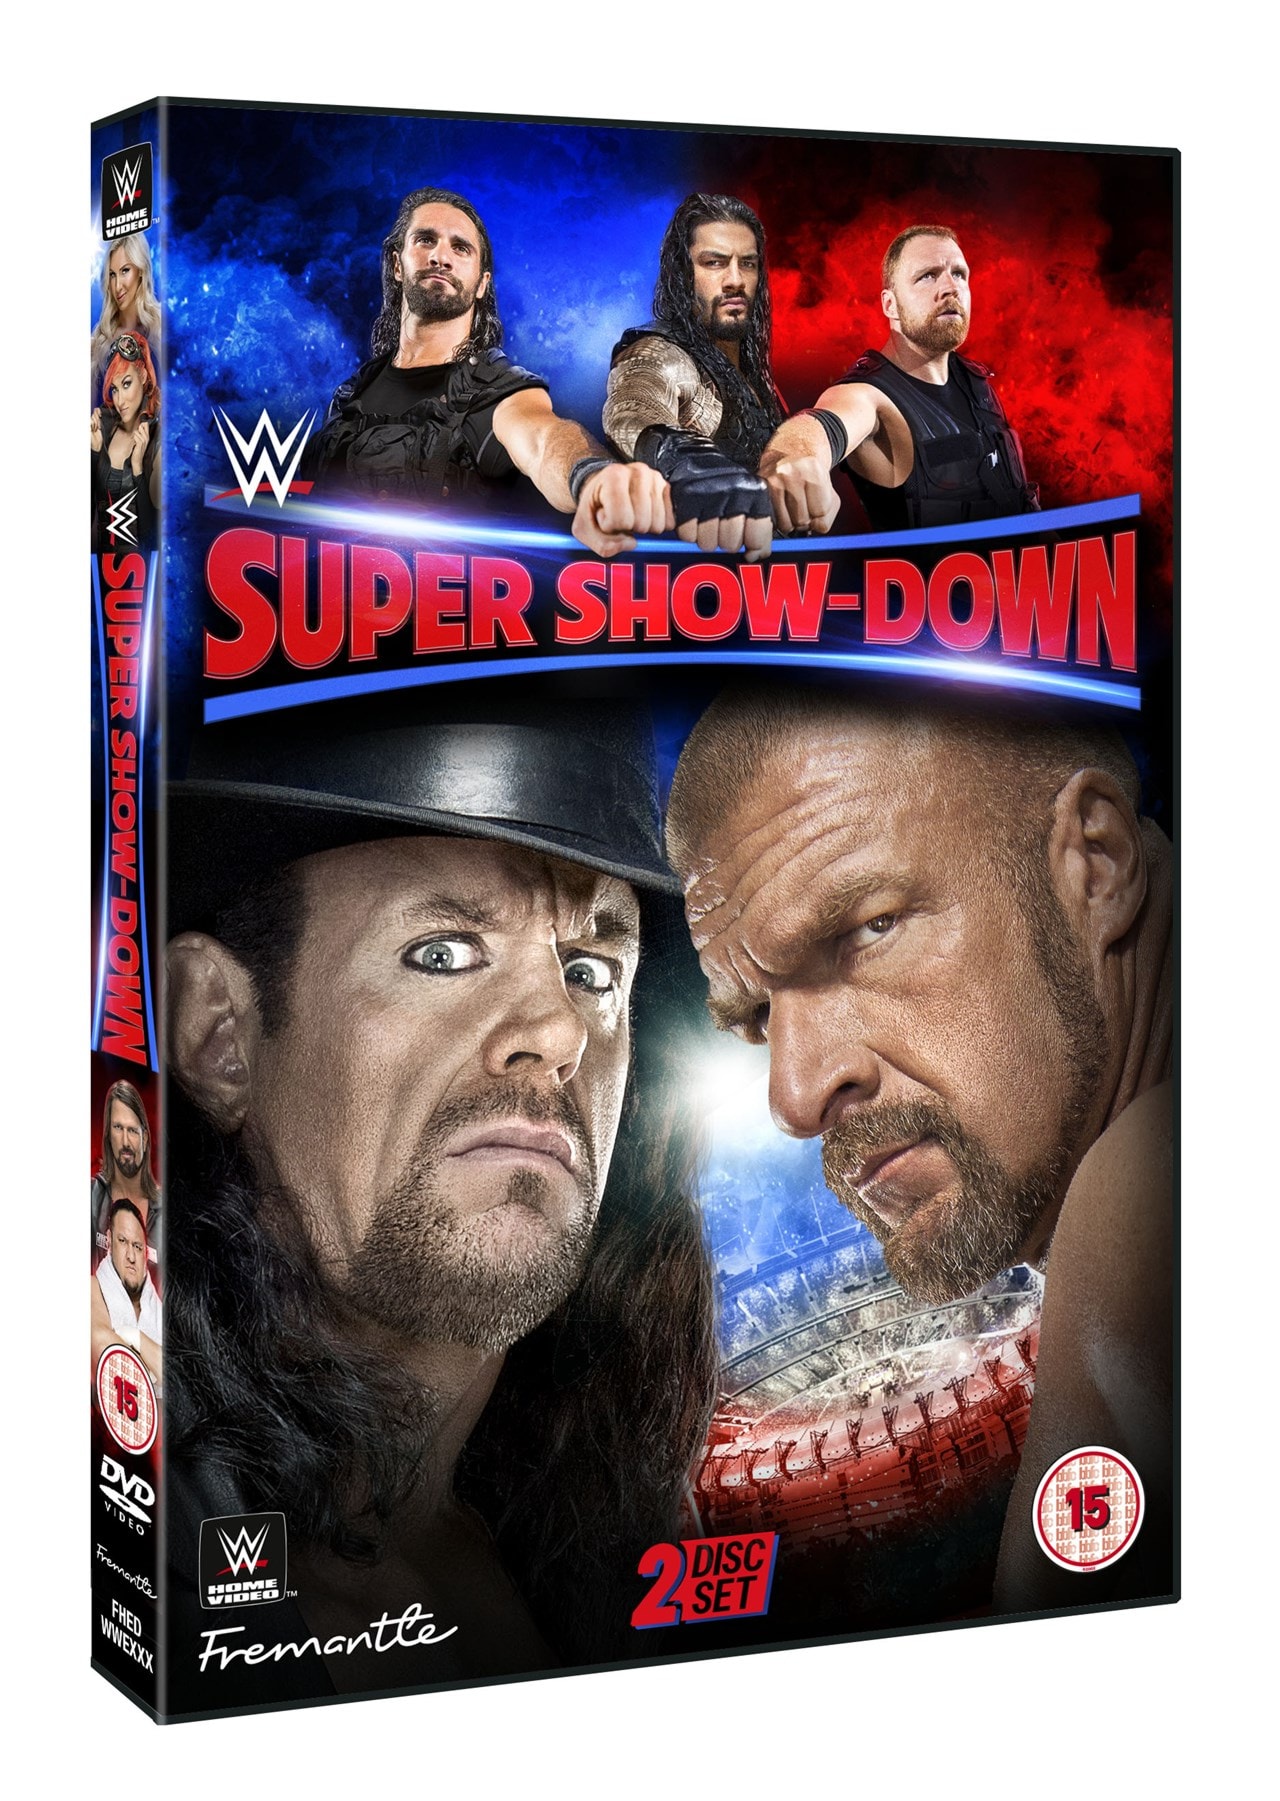 WWE Super Showdown DVD Free shipping over £20 HMV Store